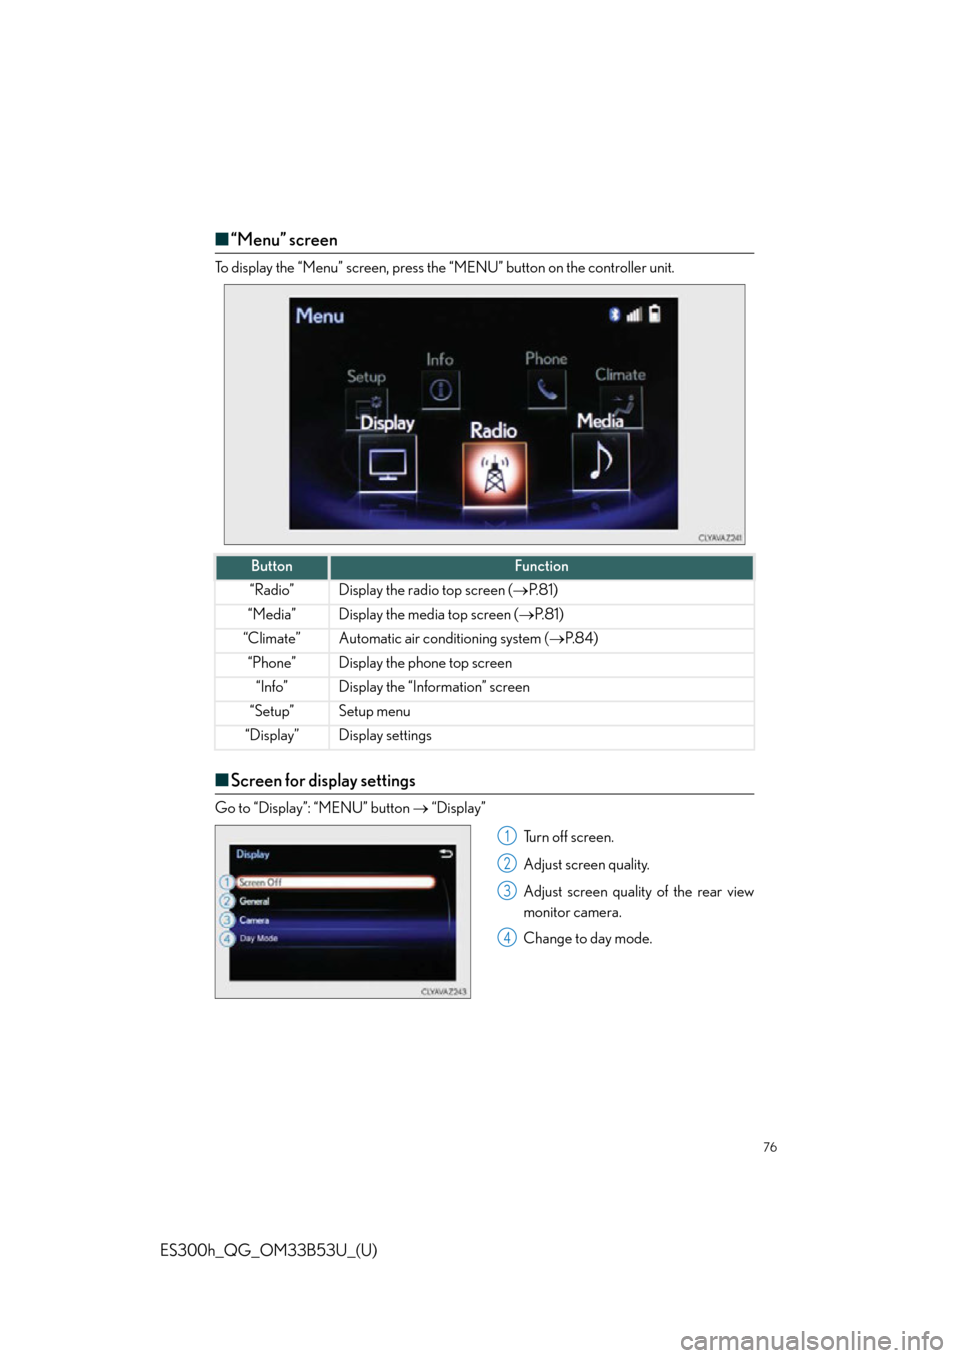 Lexus ES300h 2015  Playing an audio CD and MP3/WMA/AAC discs / Owners Manual Quick Guide (OM33B53U) 76
ES300h_QG_OM33B53U_(U)
■“Menu” screen
To display the “Menu” screen, press the “MENU” button on the controller unit.
■Screen for display settings
Go to “Display”: “MENU” butt